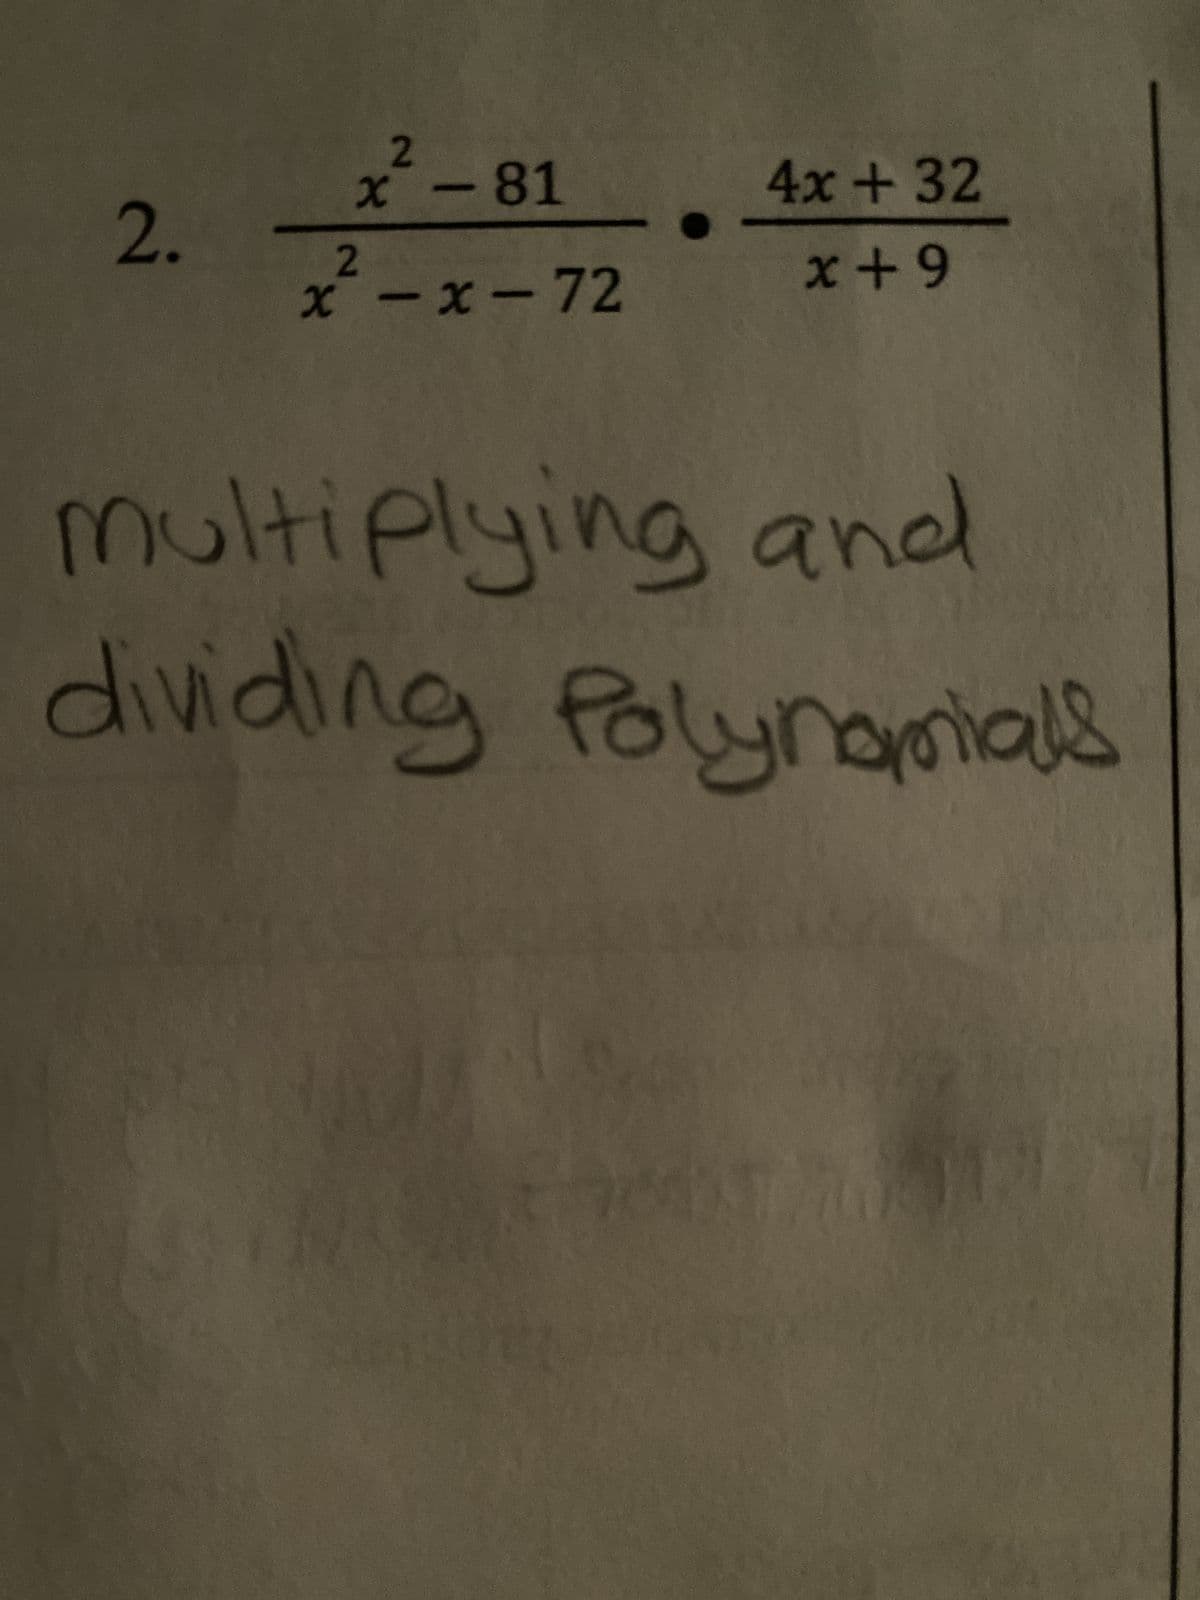 2.
2
x-81
x²-x-72
●
4x +32
x+9
multiplying and
dividing Polynomials